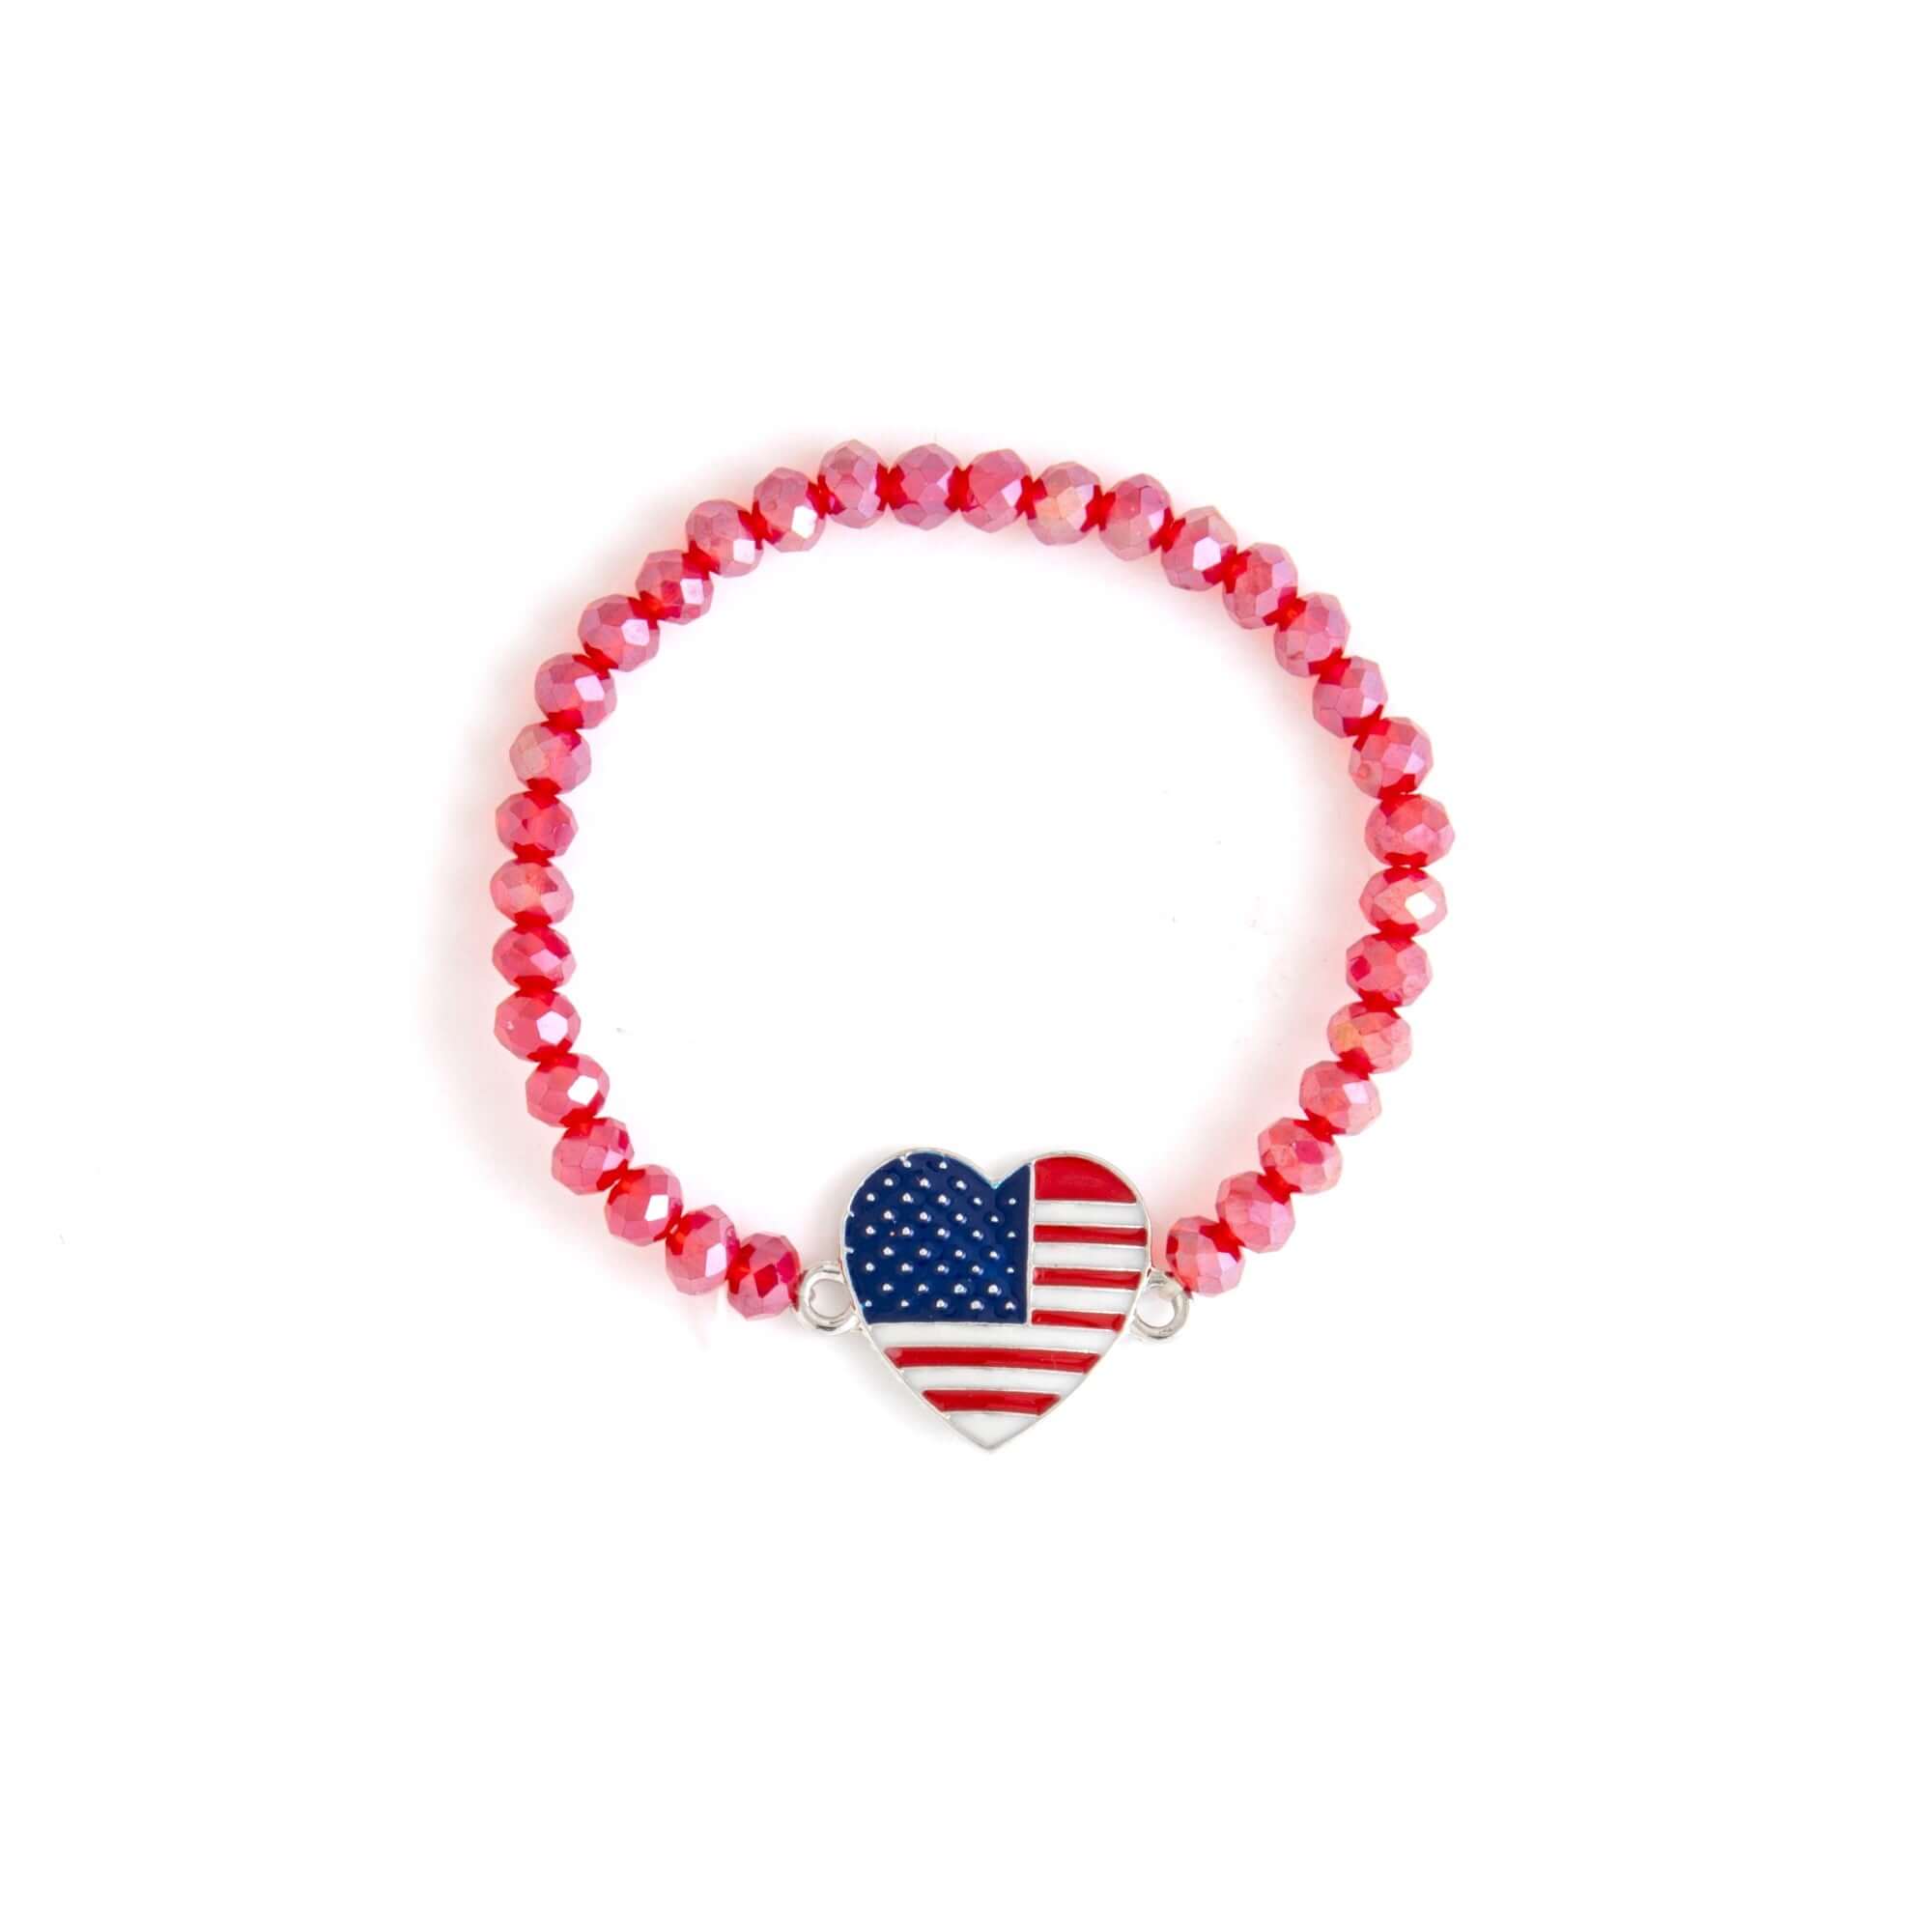 Crystal Bracelet with American Flag Heart Charm